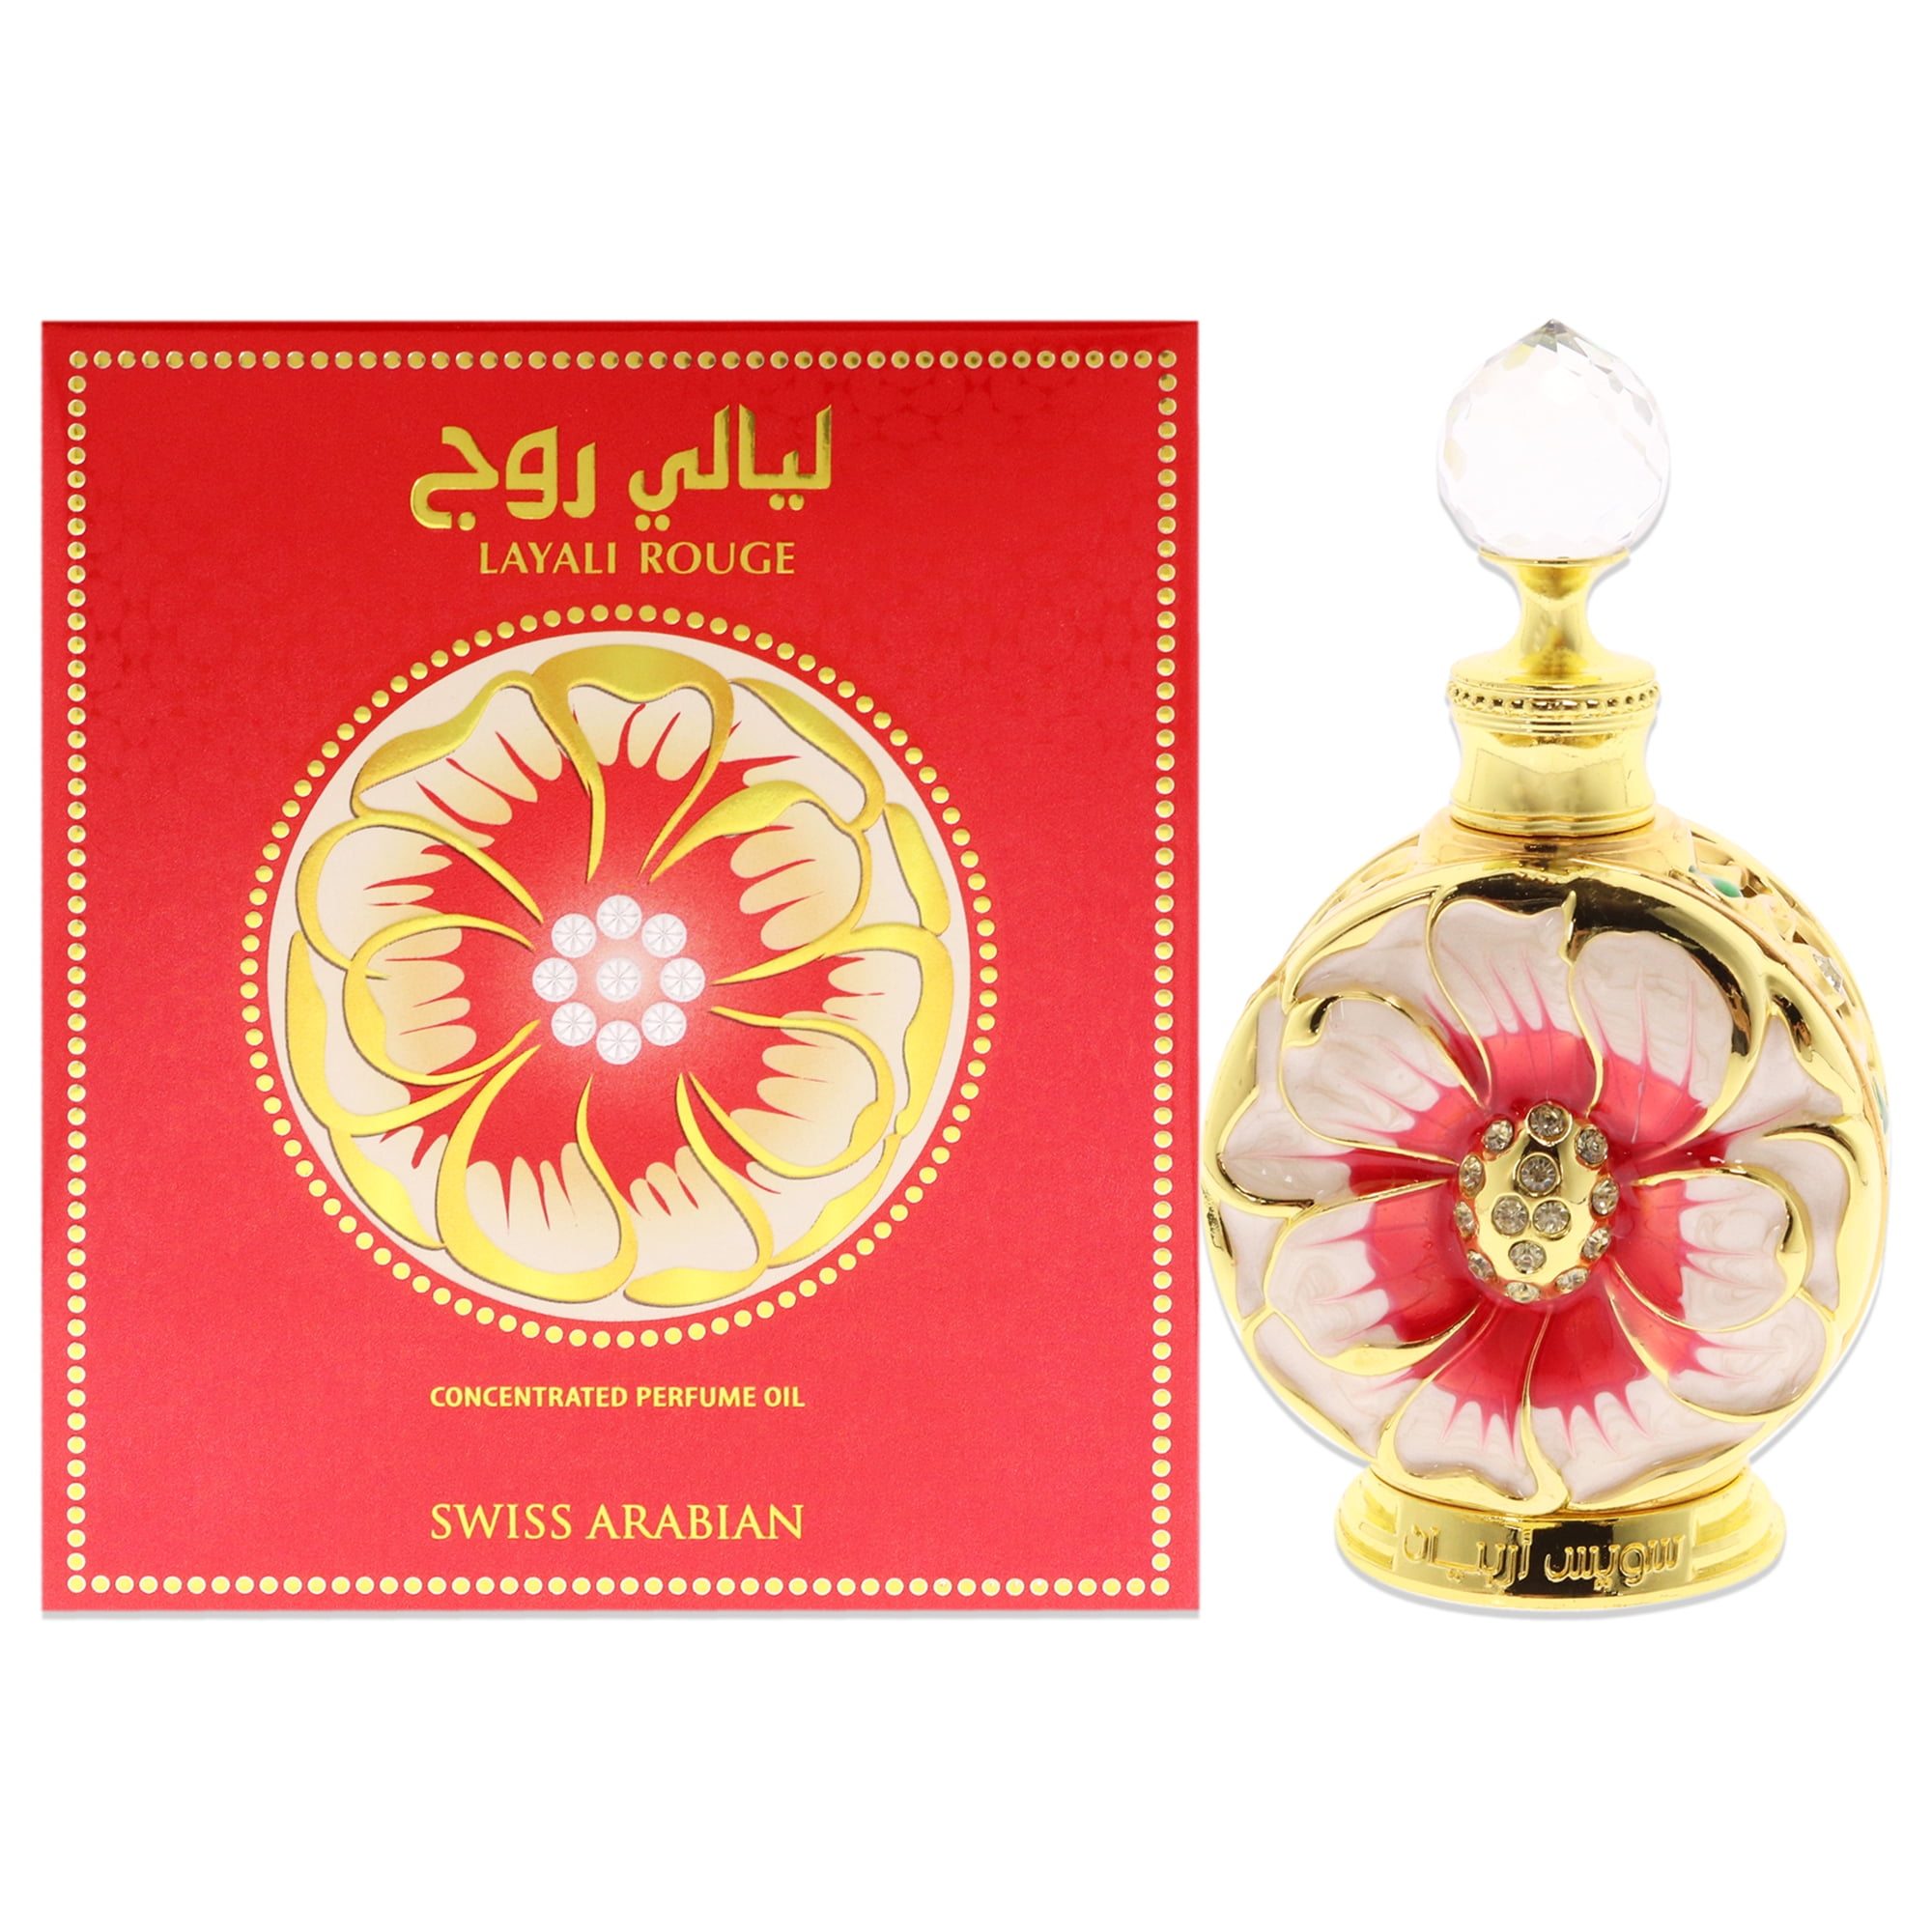 SWISS ARABIAN Layali Rouge  Fragrance Review 